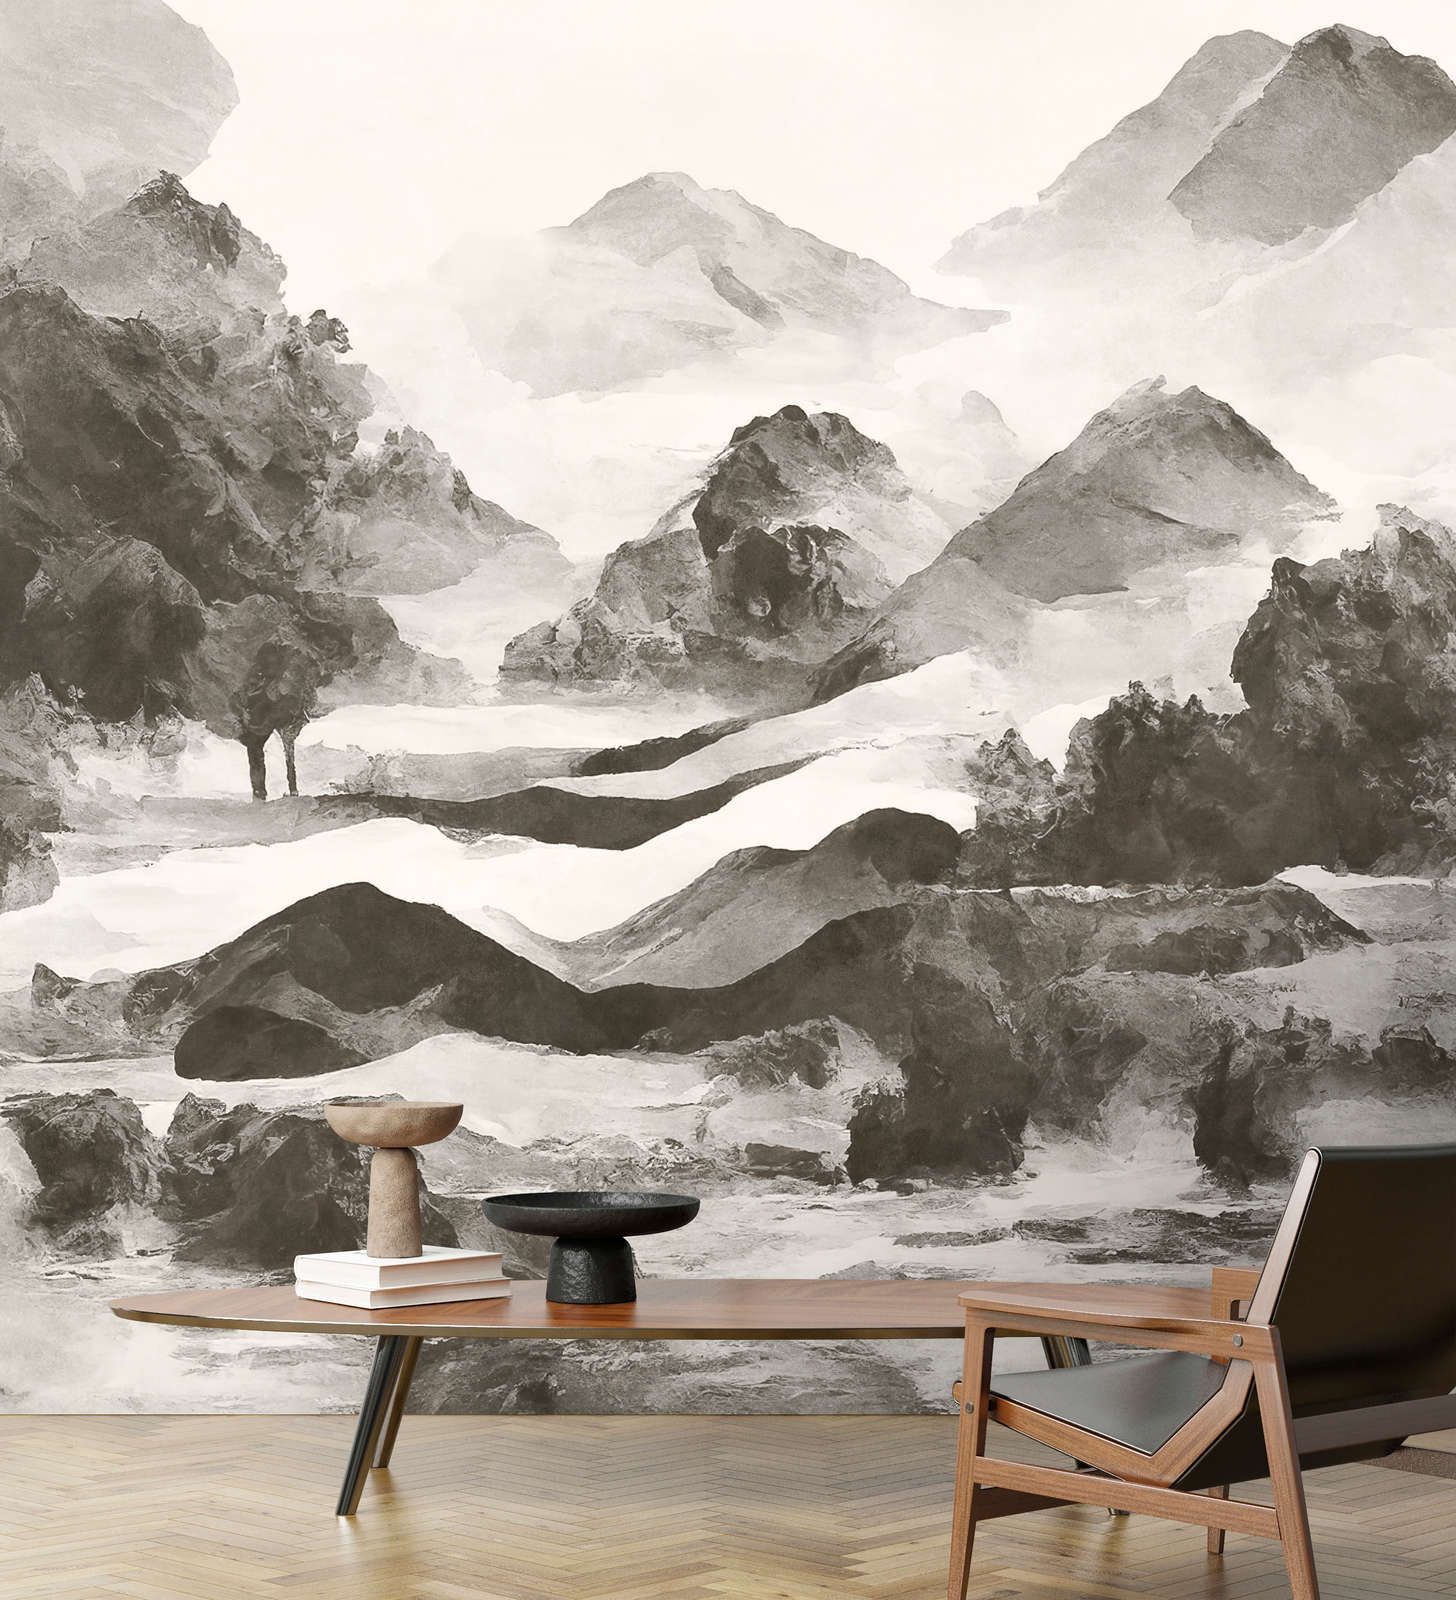             Photo wallpaper »tinterra 1« - Landscape with mountains & fog - Grey | Light textured non-woven
        